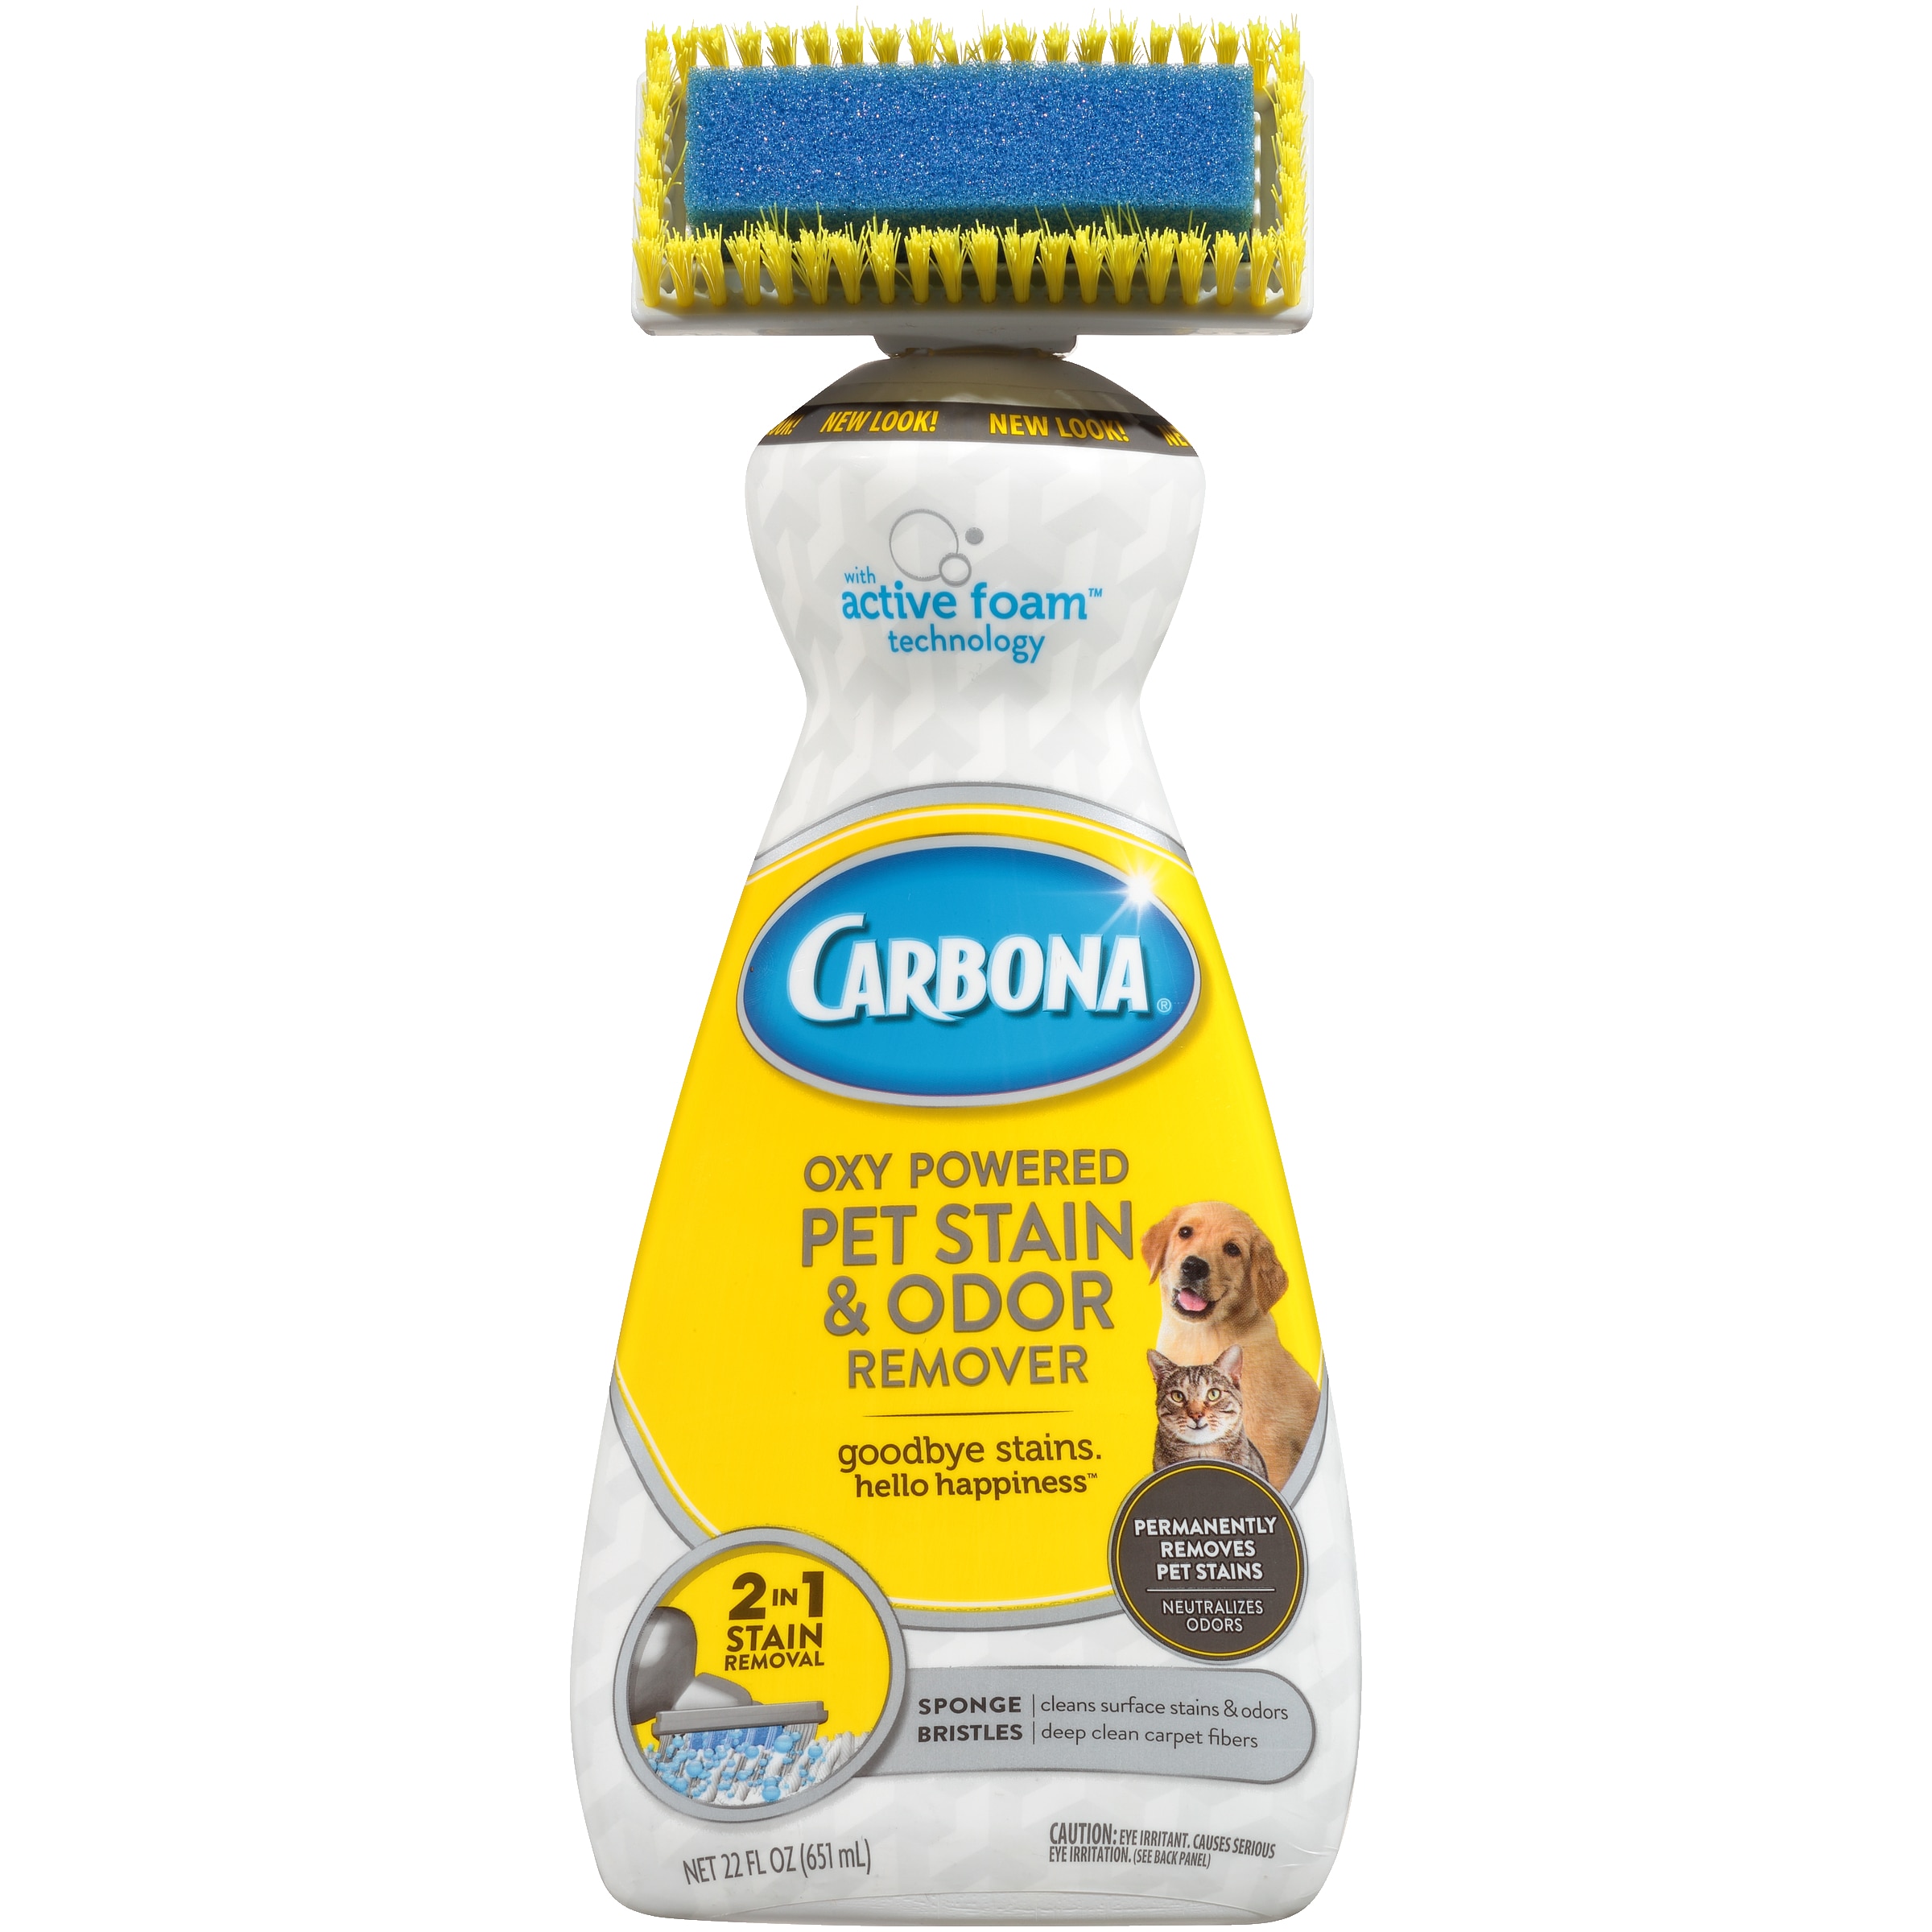 Carbona Carbona Silver Wipes 12 ct. (10 boxes) Cotton Detergent